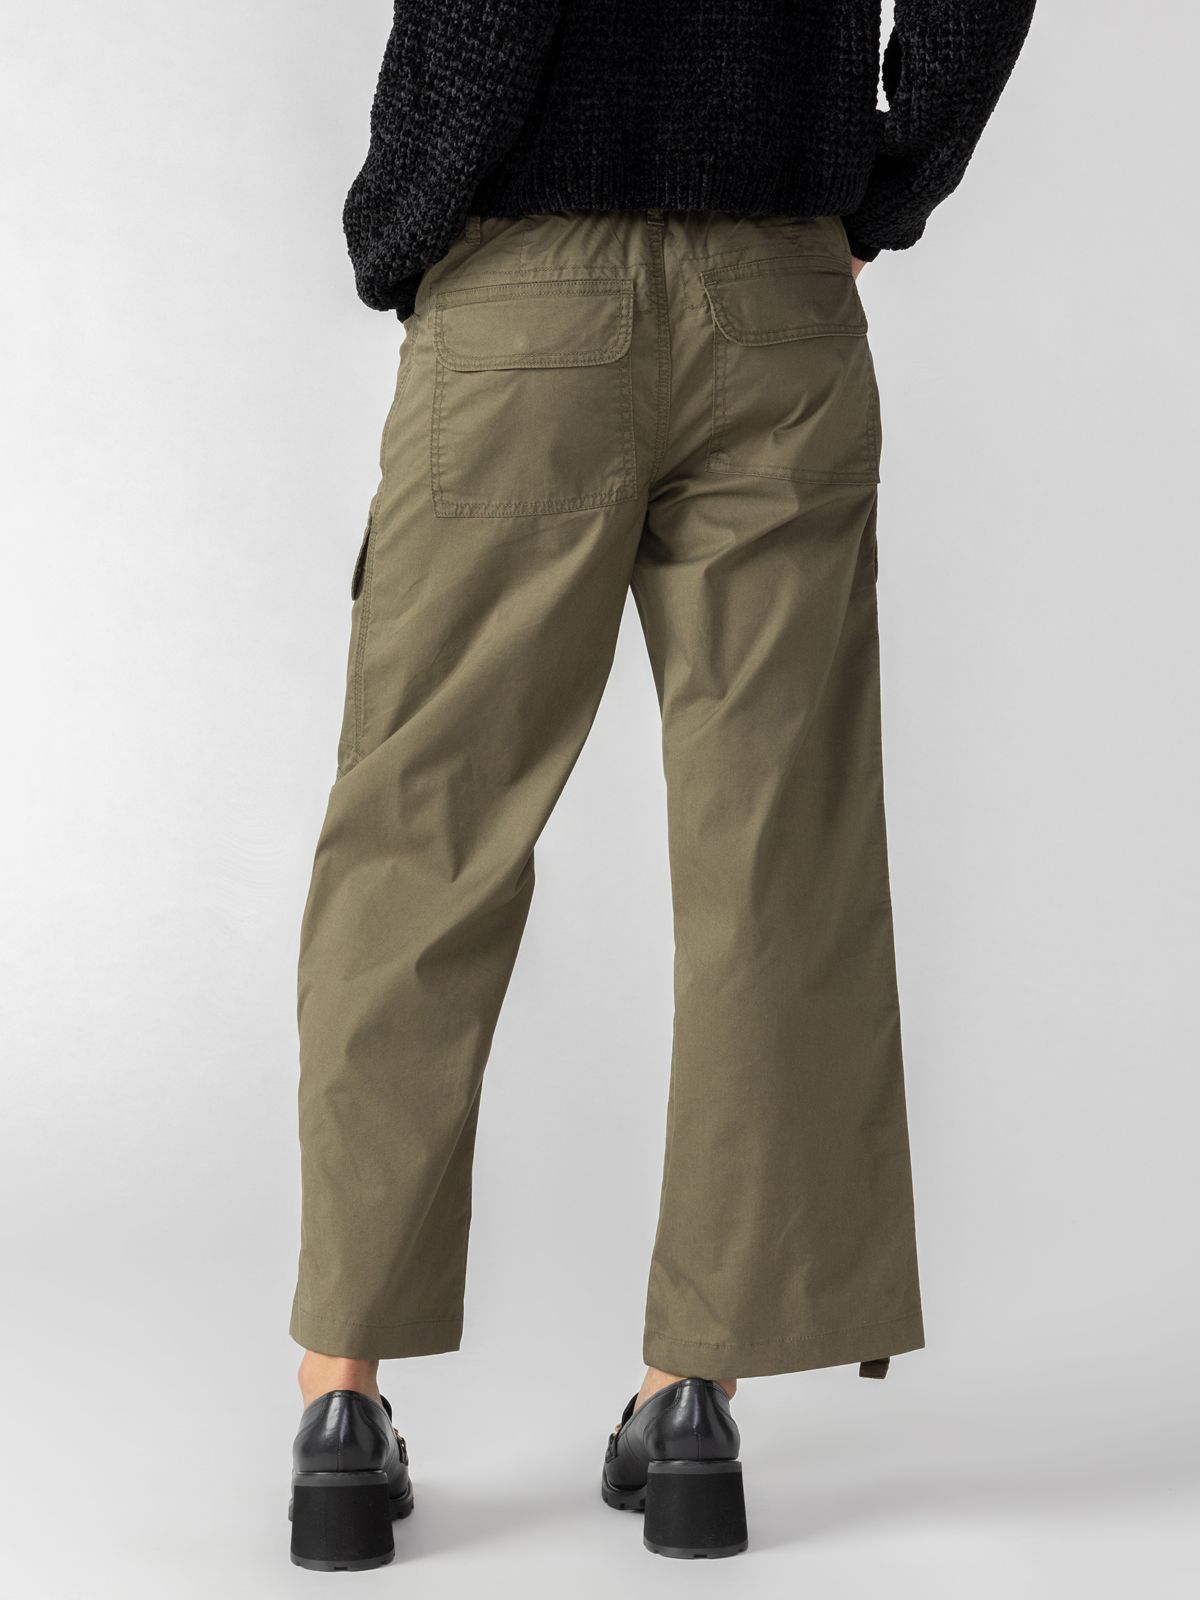 CABI Fall 2021 - Rust Explorer Cargo Pants - Style# 4138 - Size 6